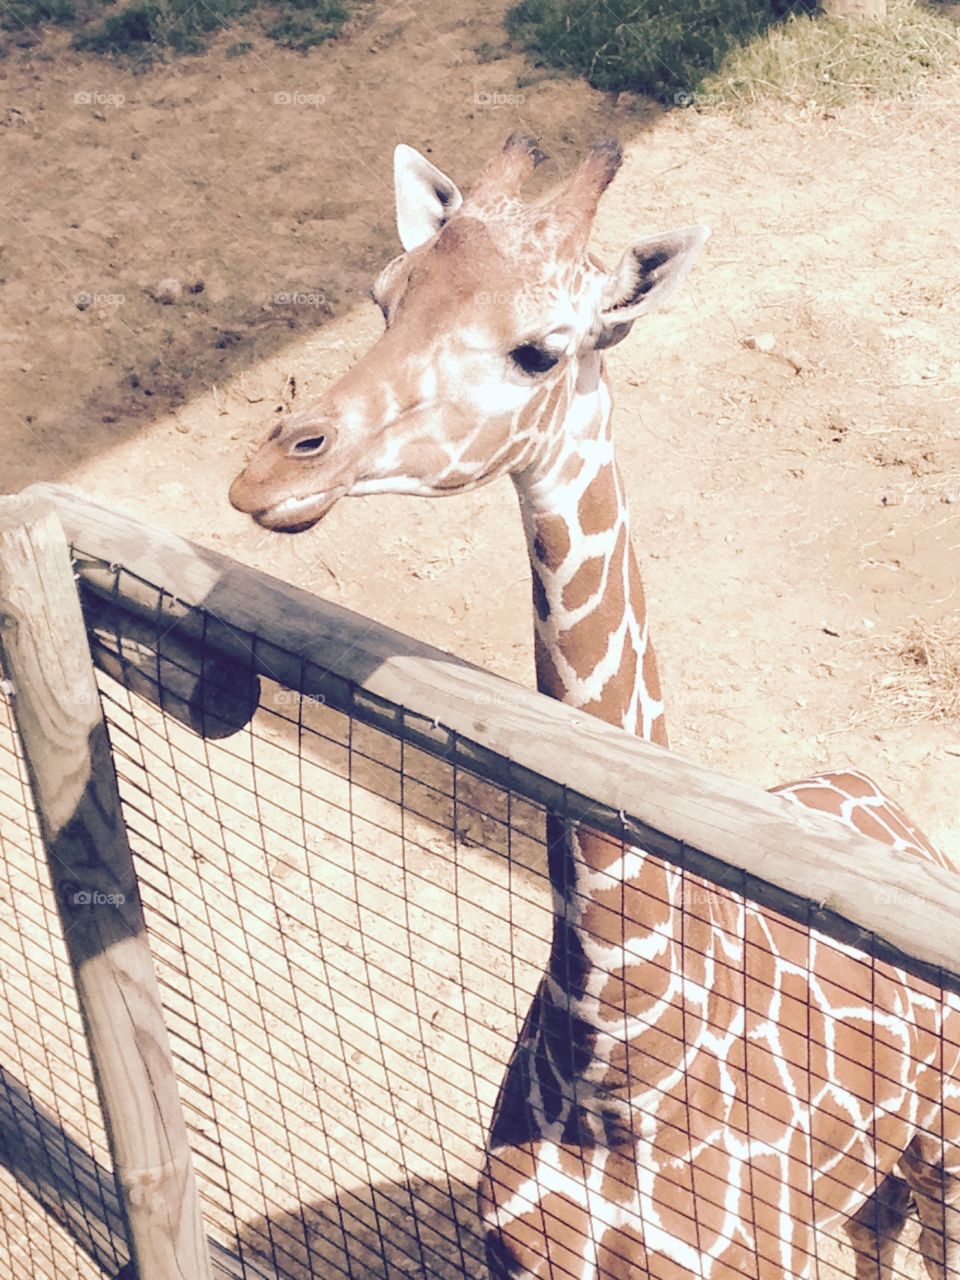 Zoo giraffes 